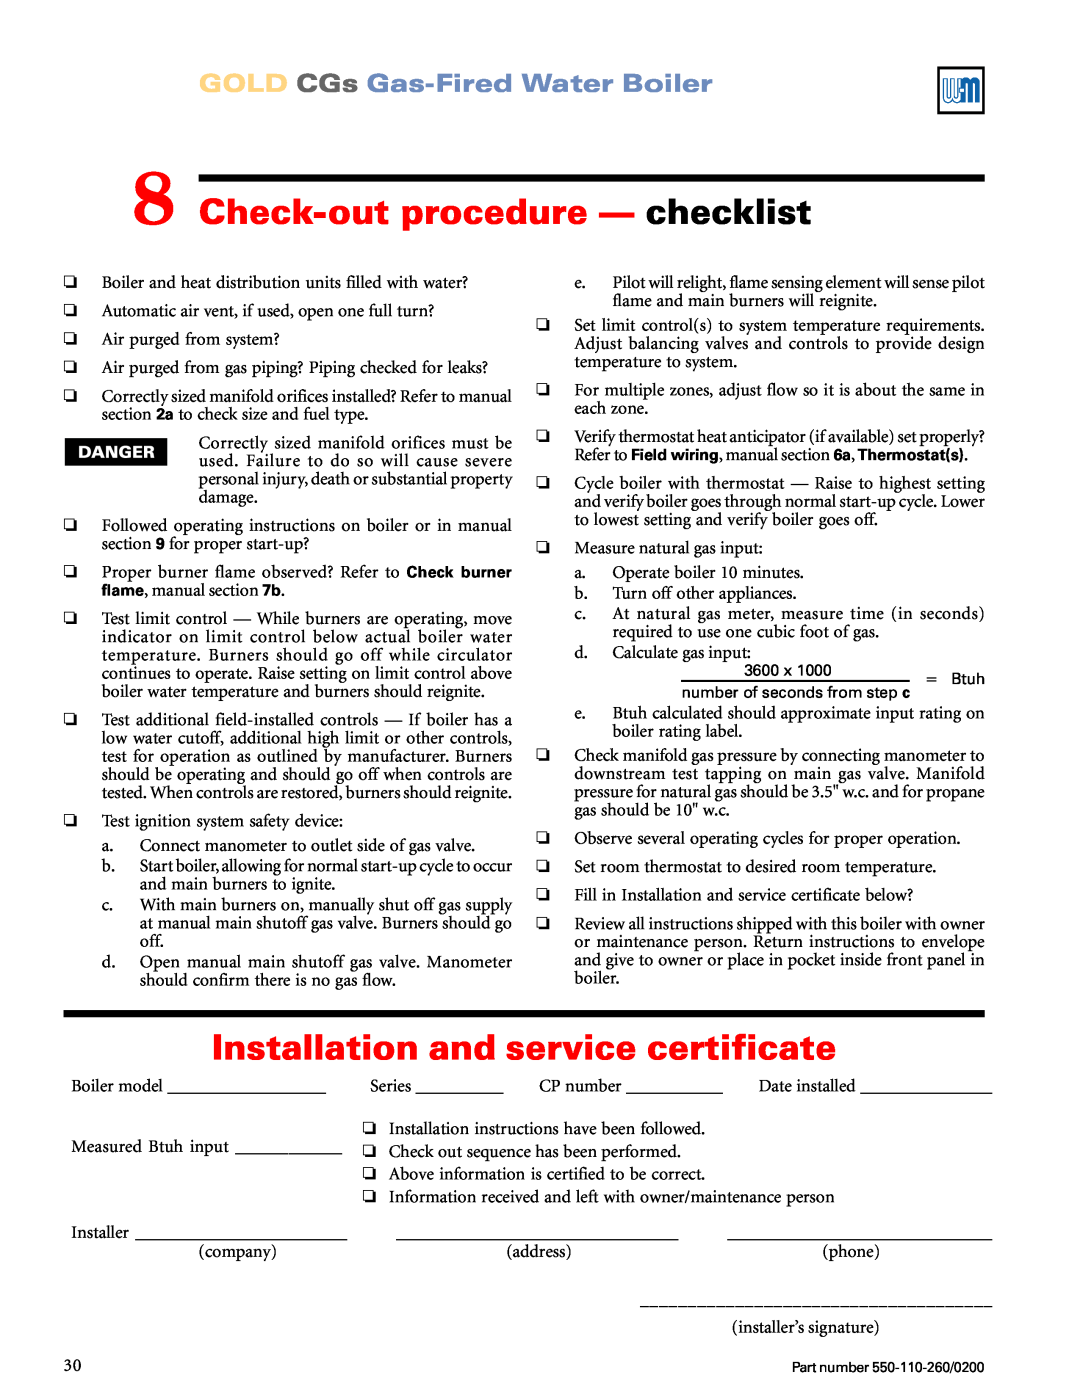 Weil-McLain 550-110-260/02002 manual 8Check-outprocedure — checklist, Installation and service certificate 